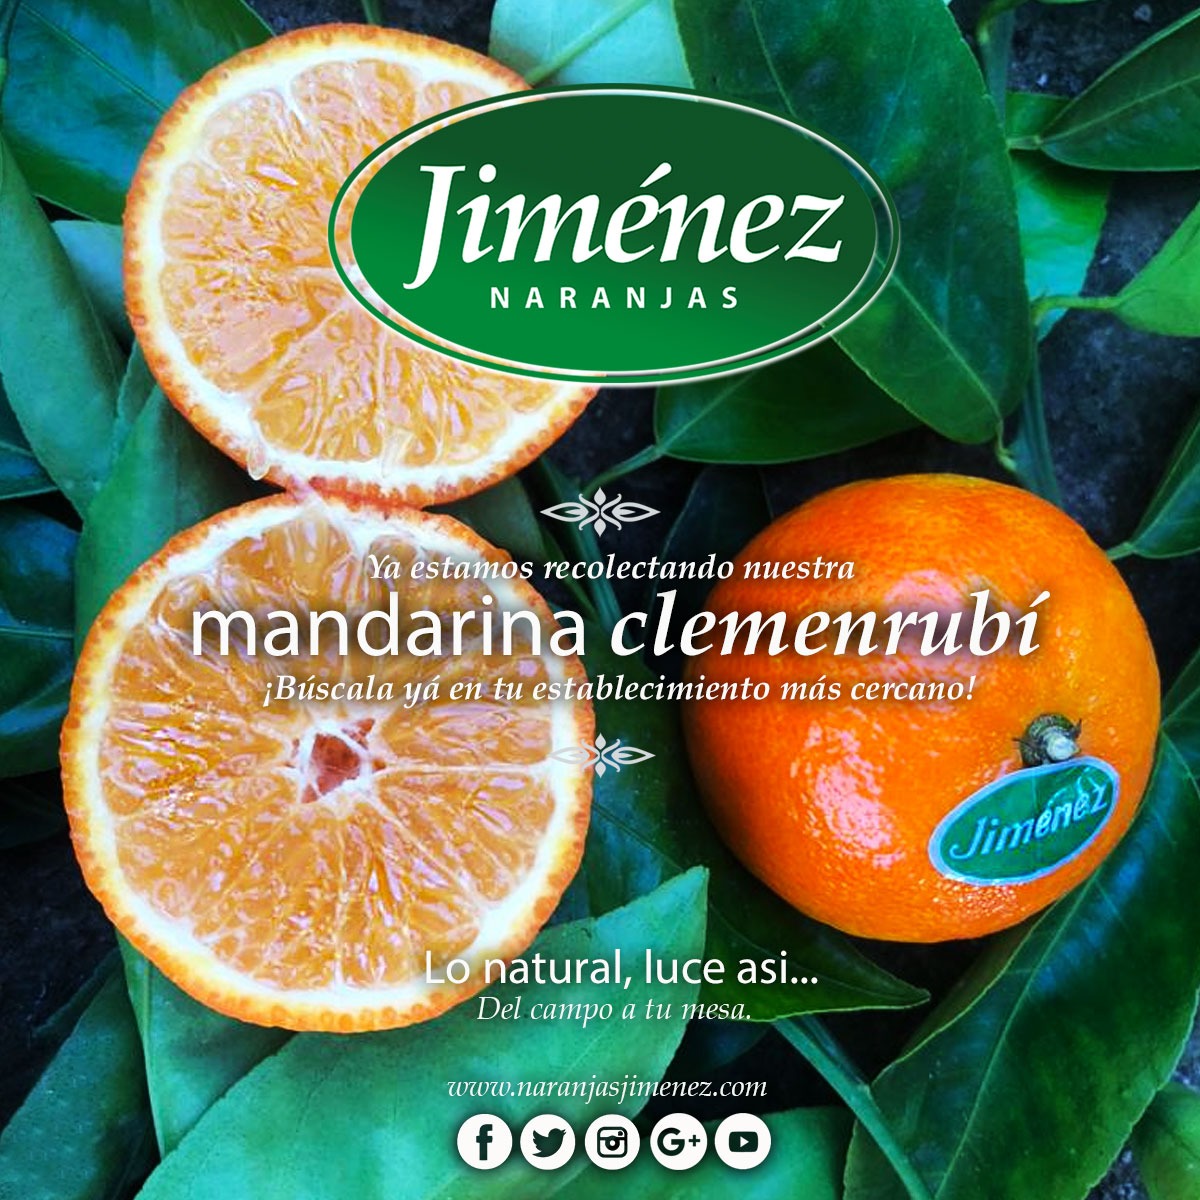 Naranjas Jimenez - Mandarinas ClemenRubi